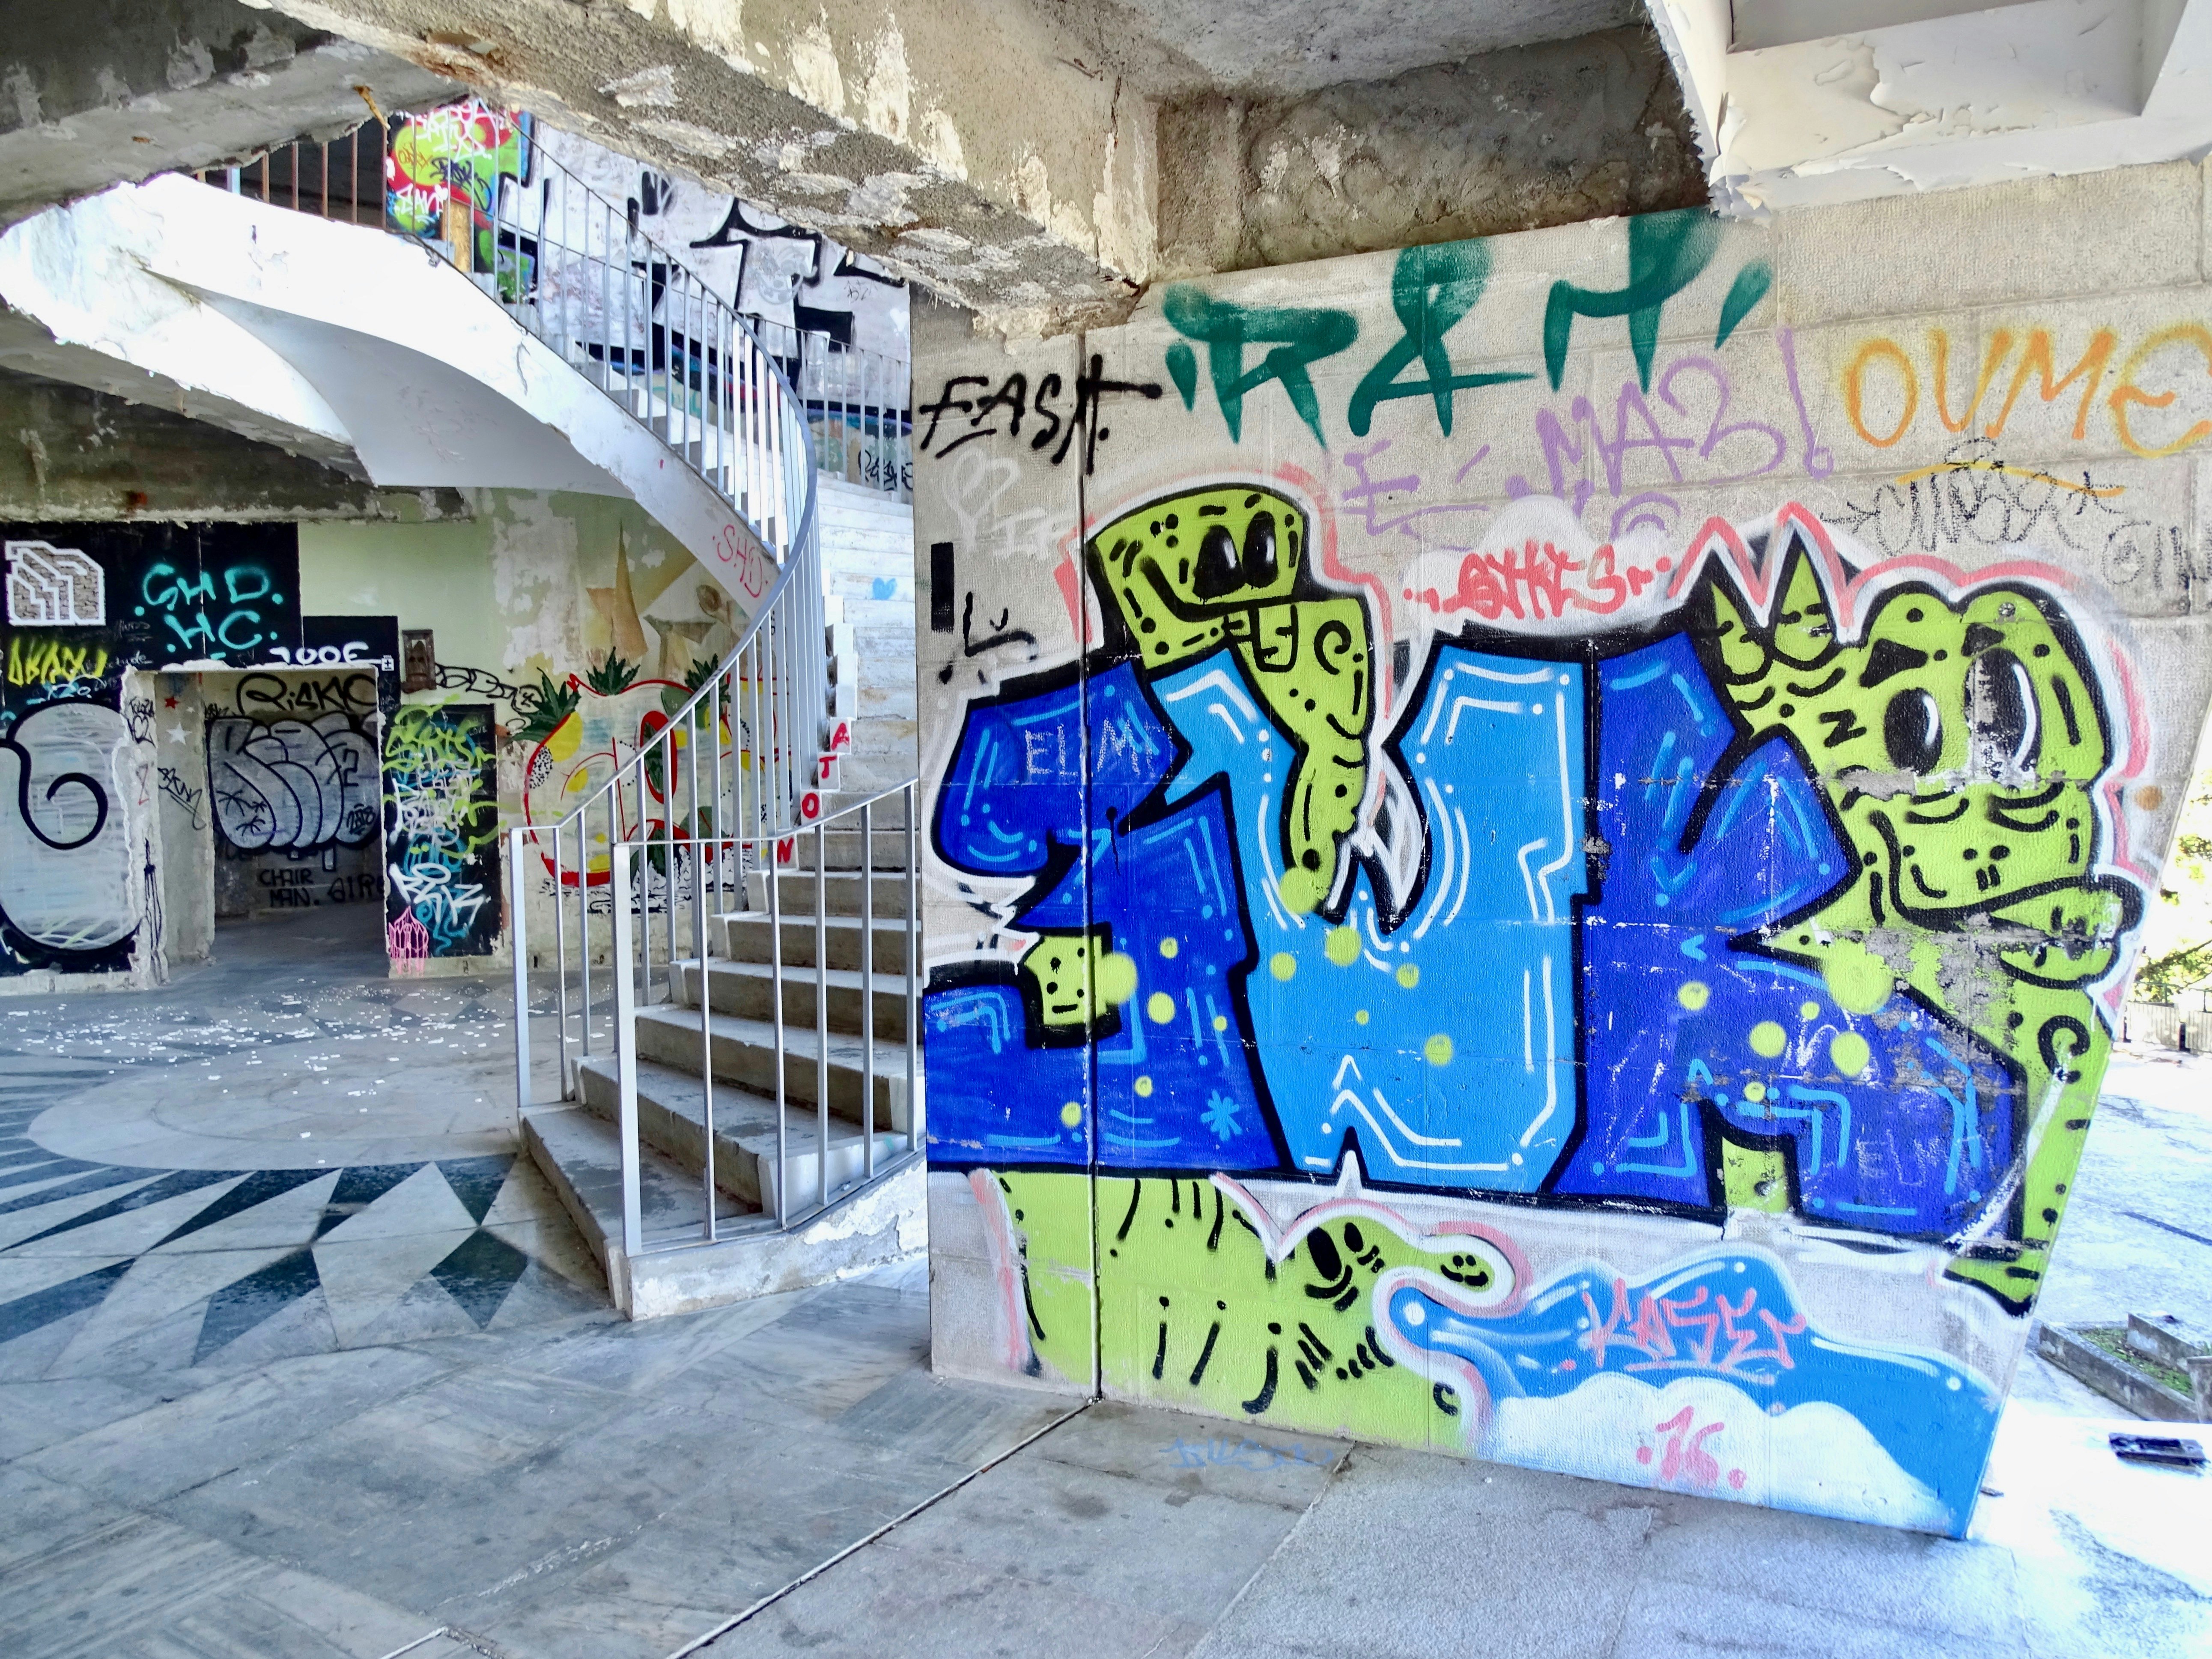 A concrete spiral staircase bordered by graffitied walls in the Miradouro Panoramico de Monsanto, Lisbon.